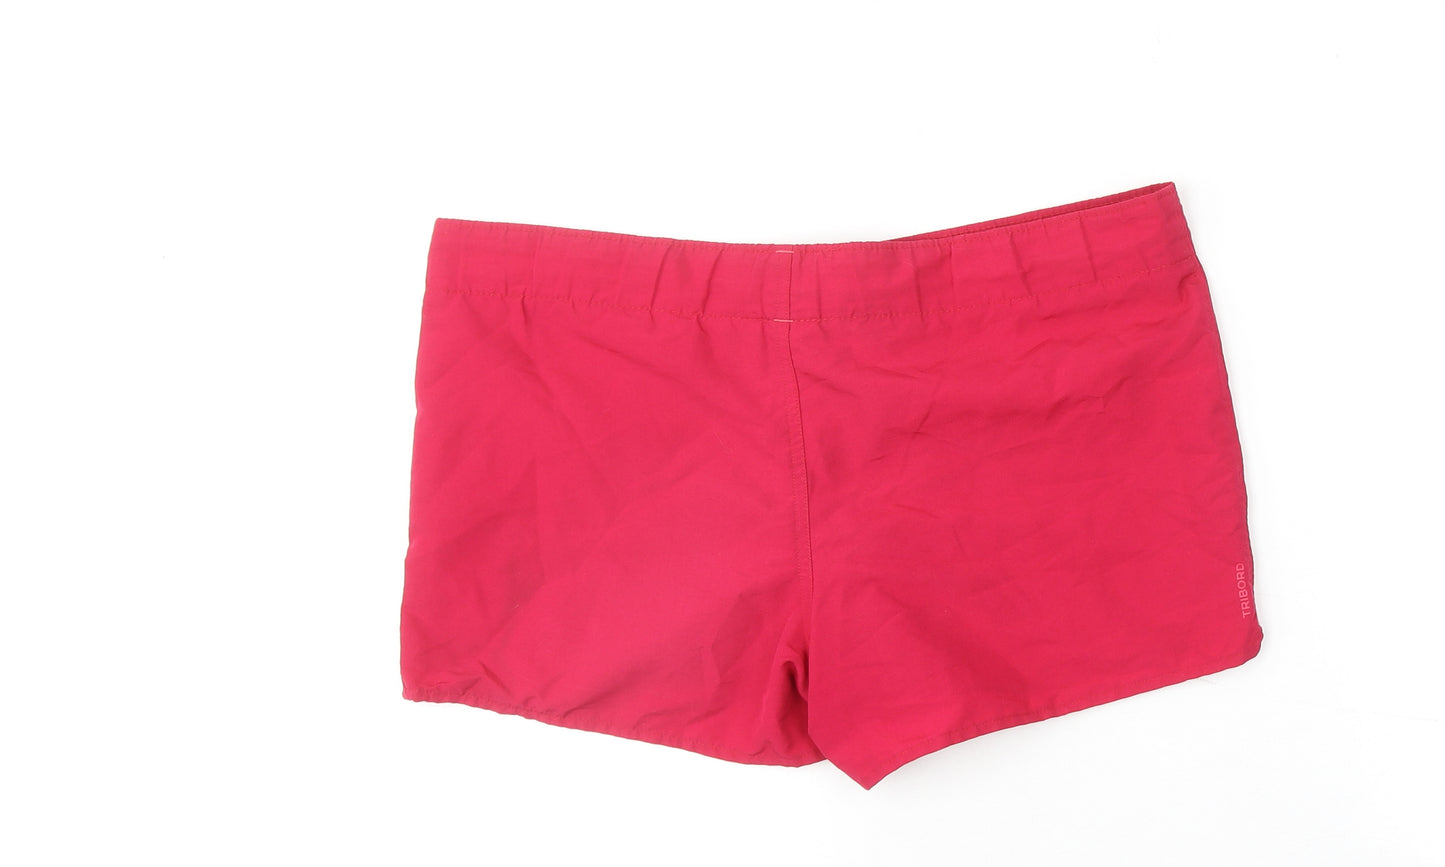 DECATHLON Womens Pink Polyester Hot Pants Shorts Size 12 Regular Drawstring